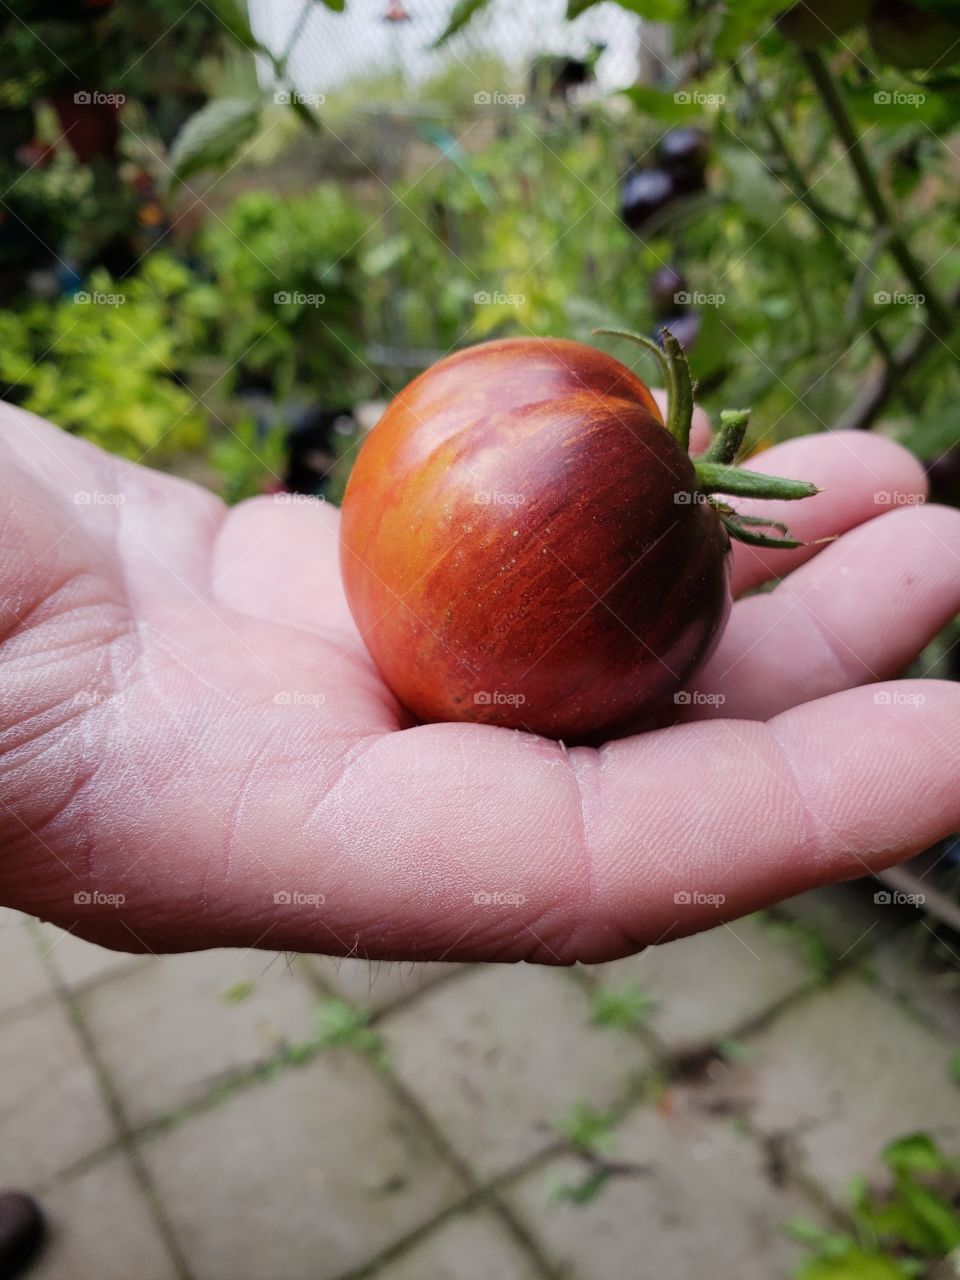 Galaxy tomato